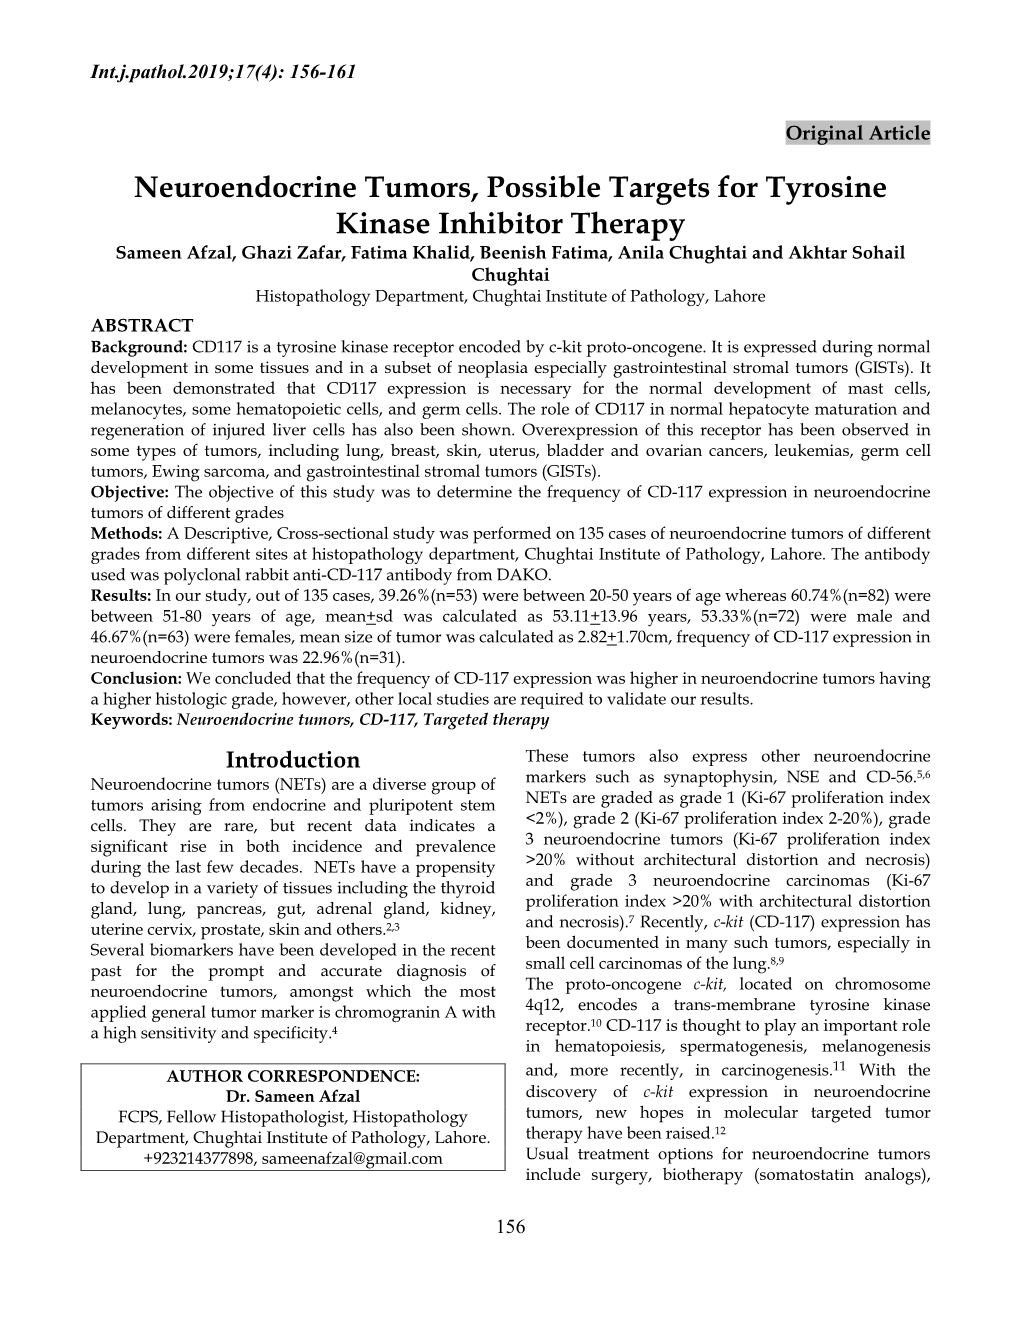 Neuroendocrine Tumors, Possible Targets for Tyrosine Kinase